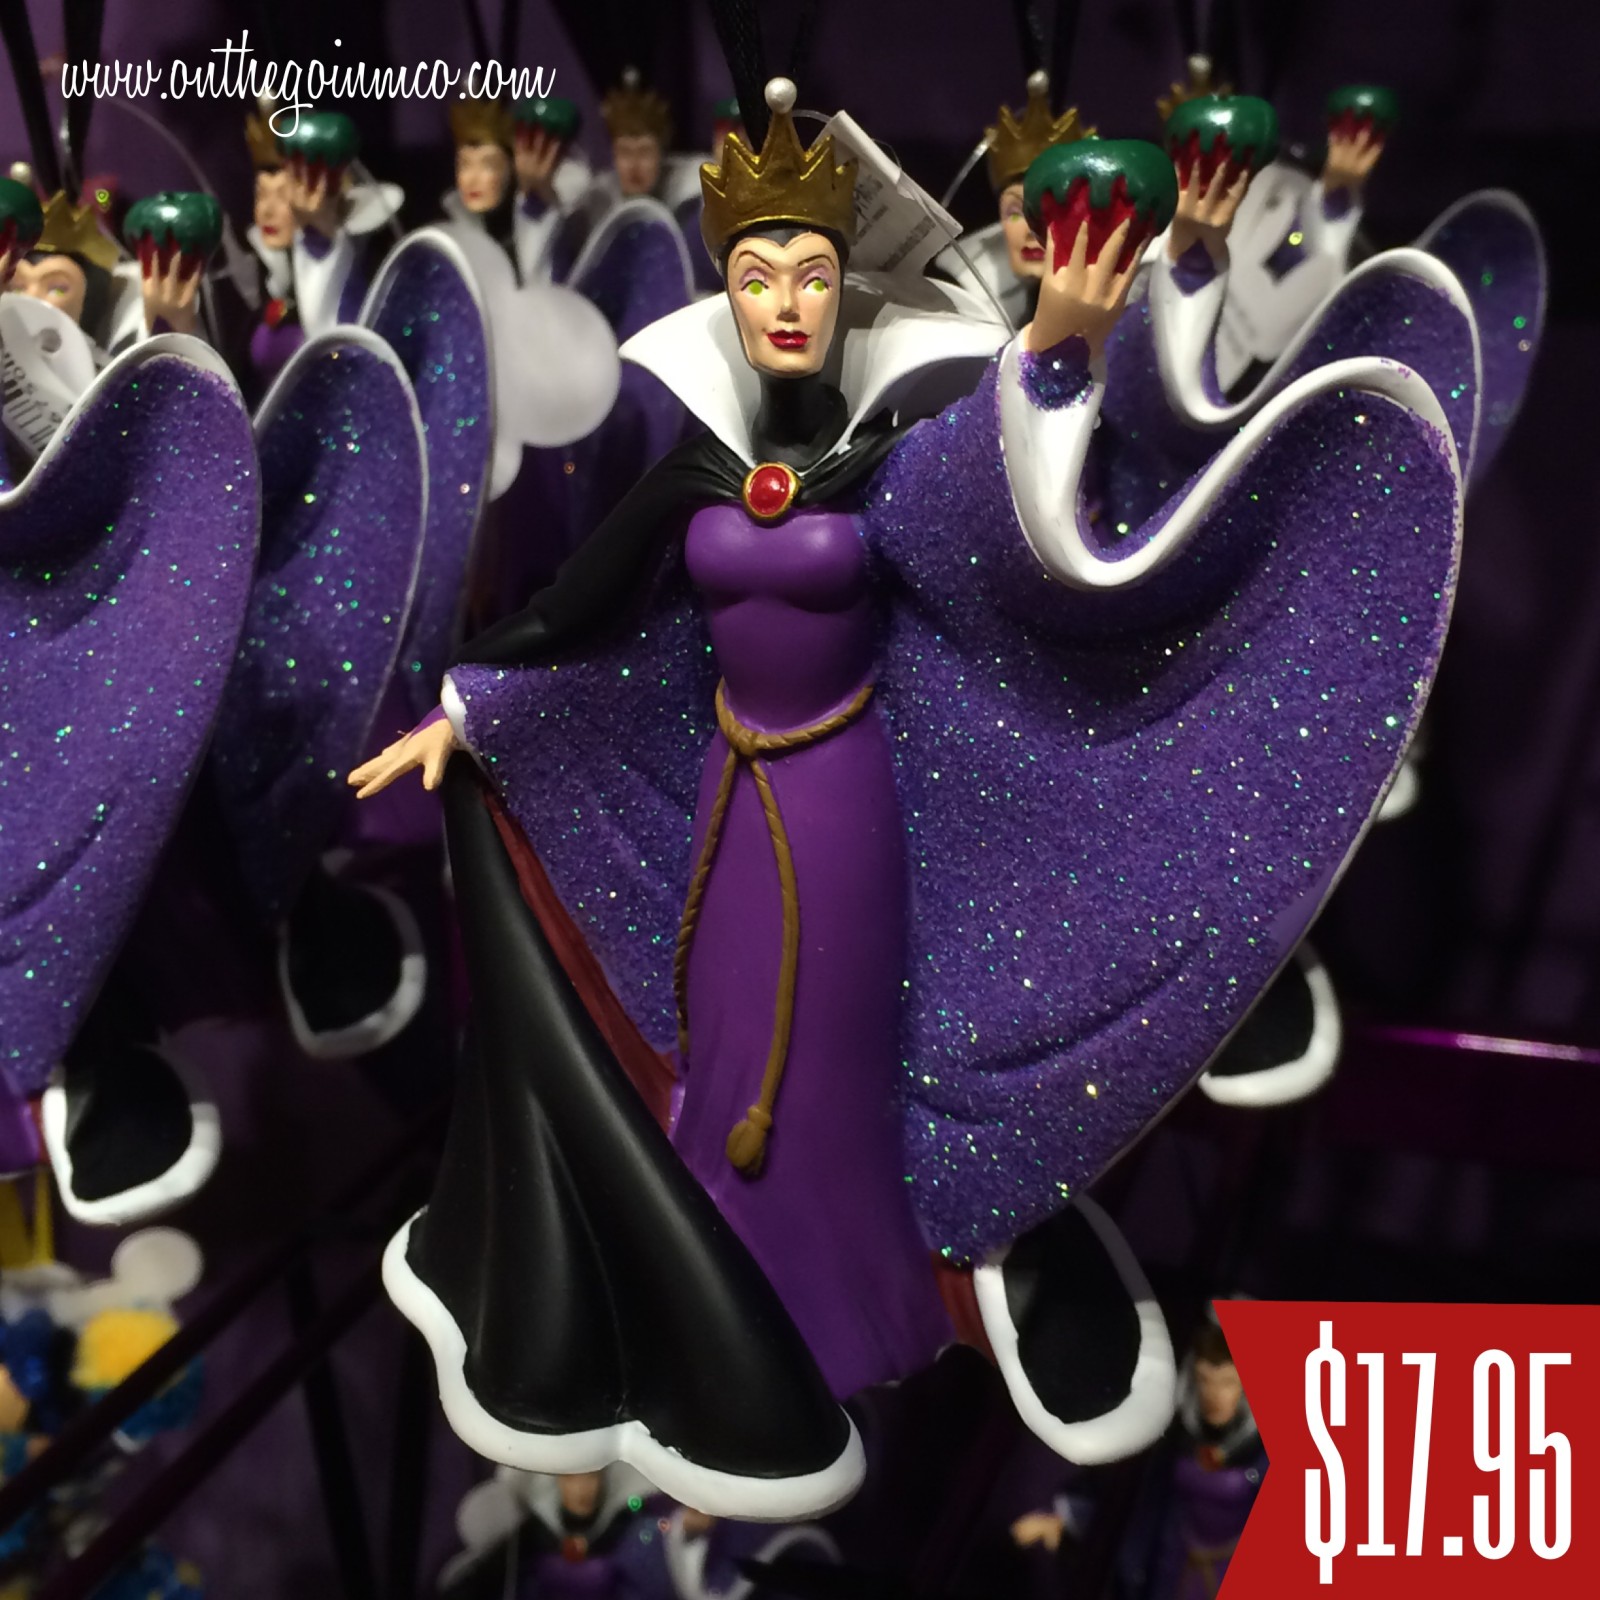 Walt Disney World Christmas Ornaments - Evil Queen